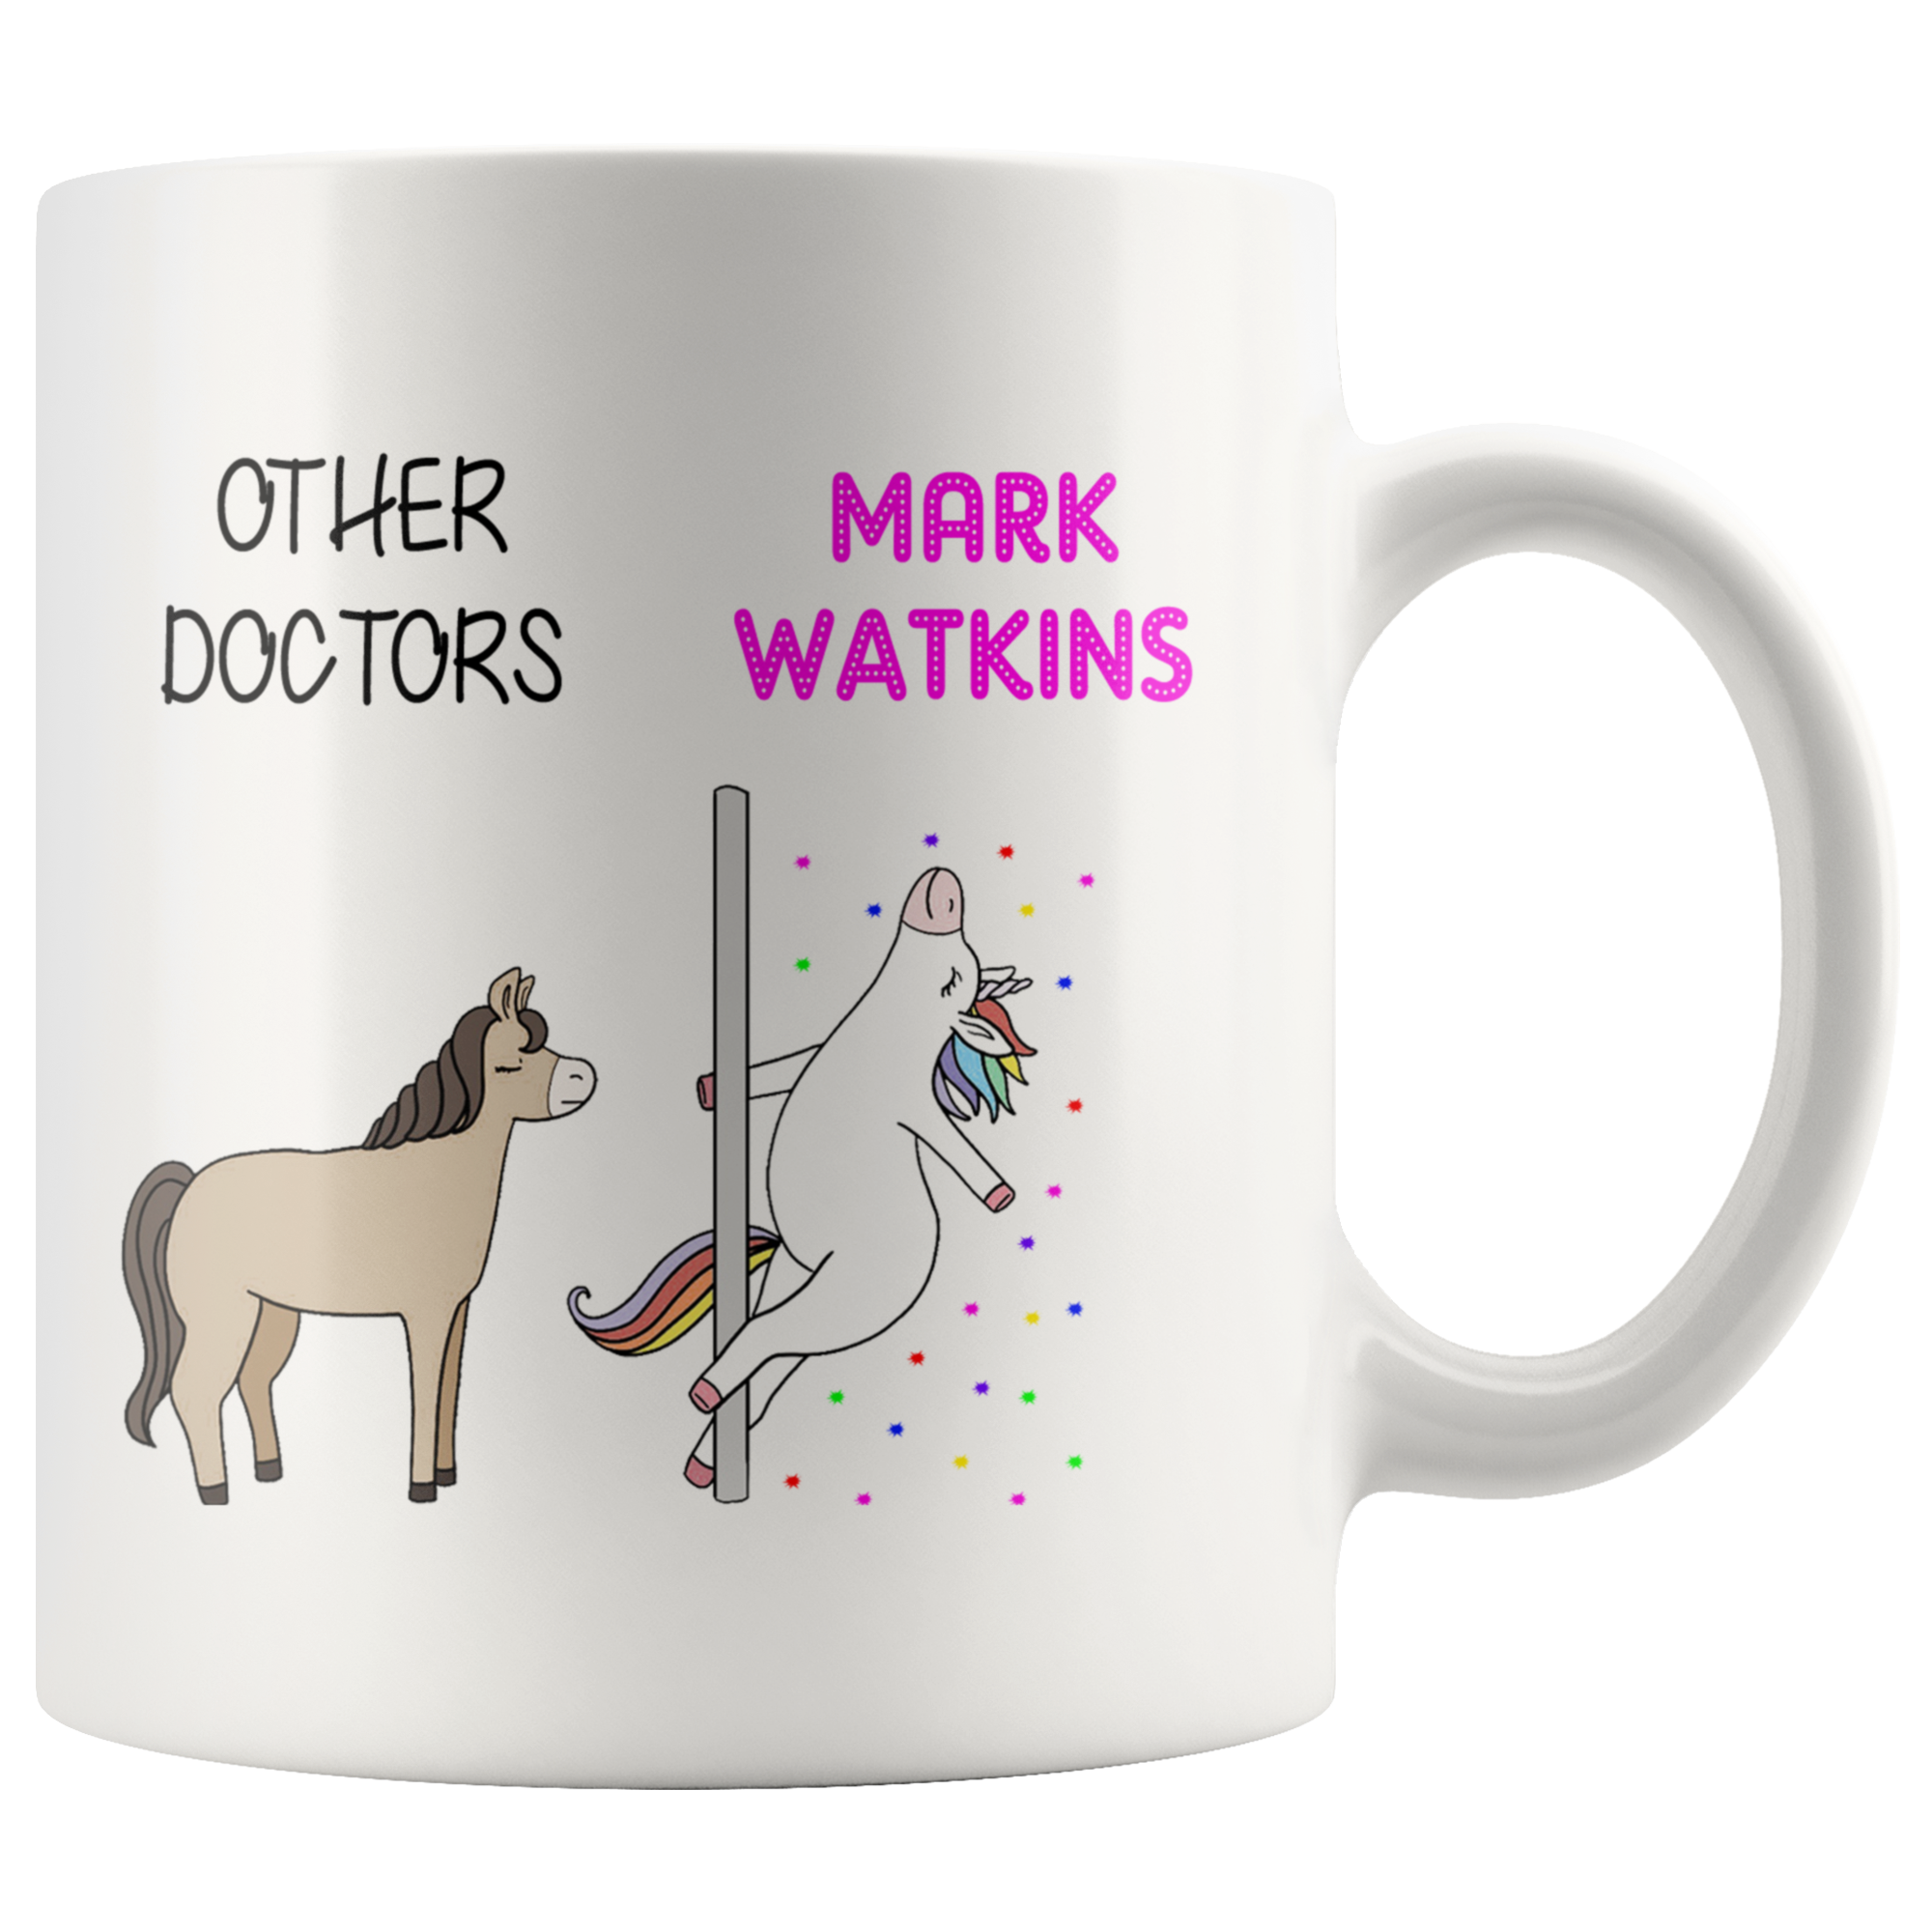 Dr Mark Watkins